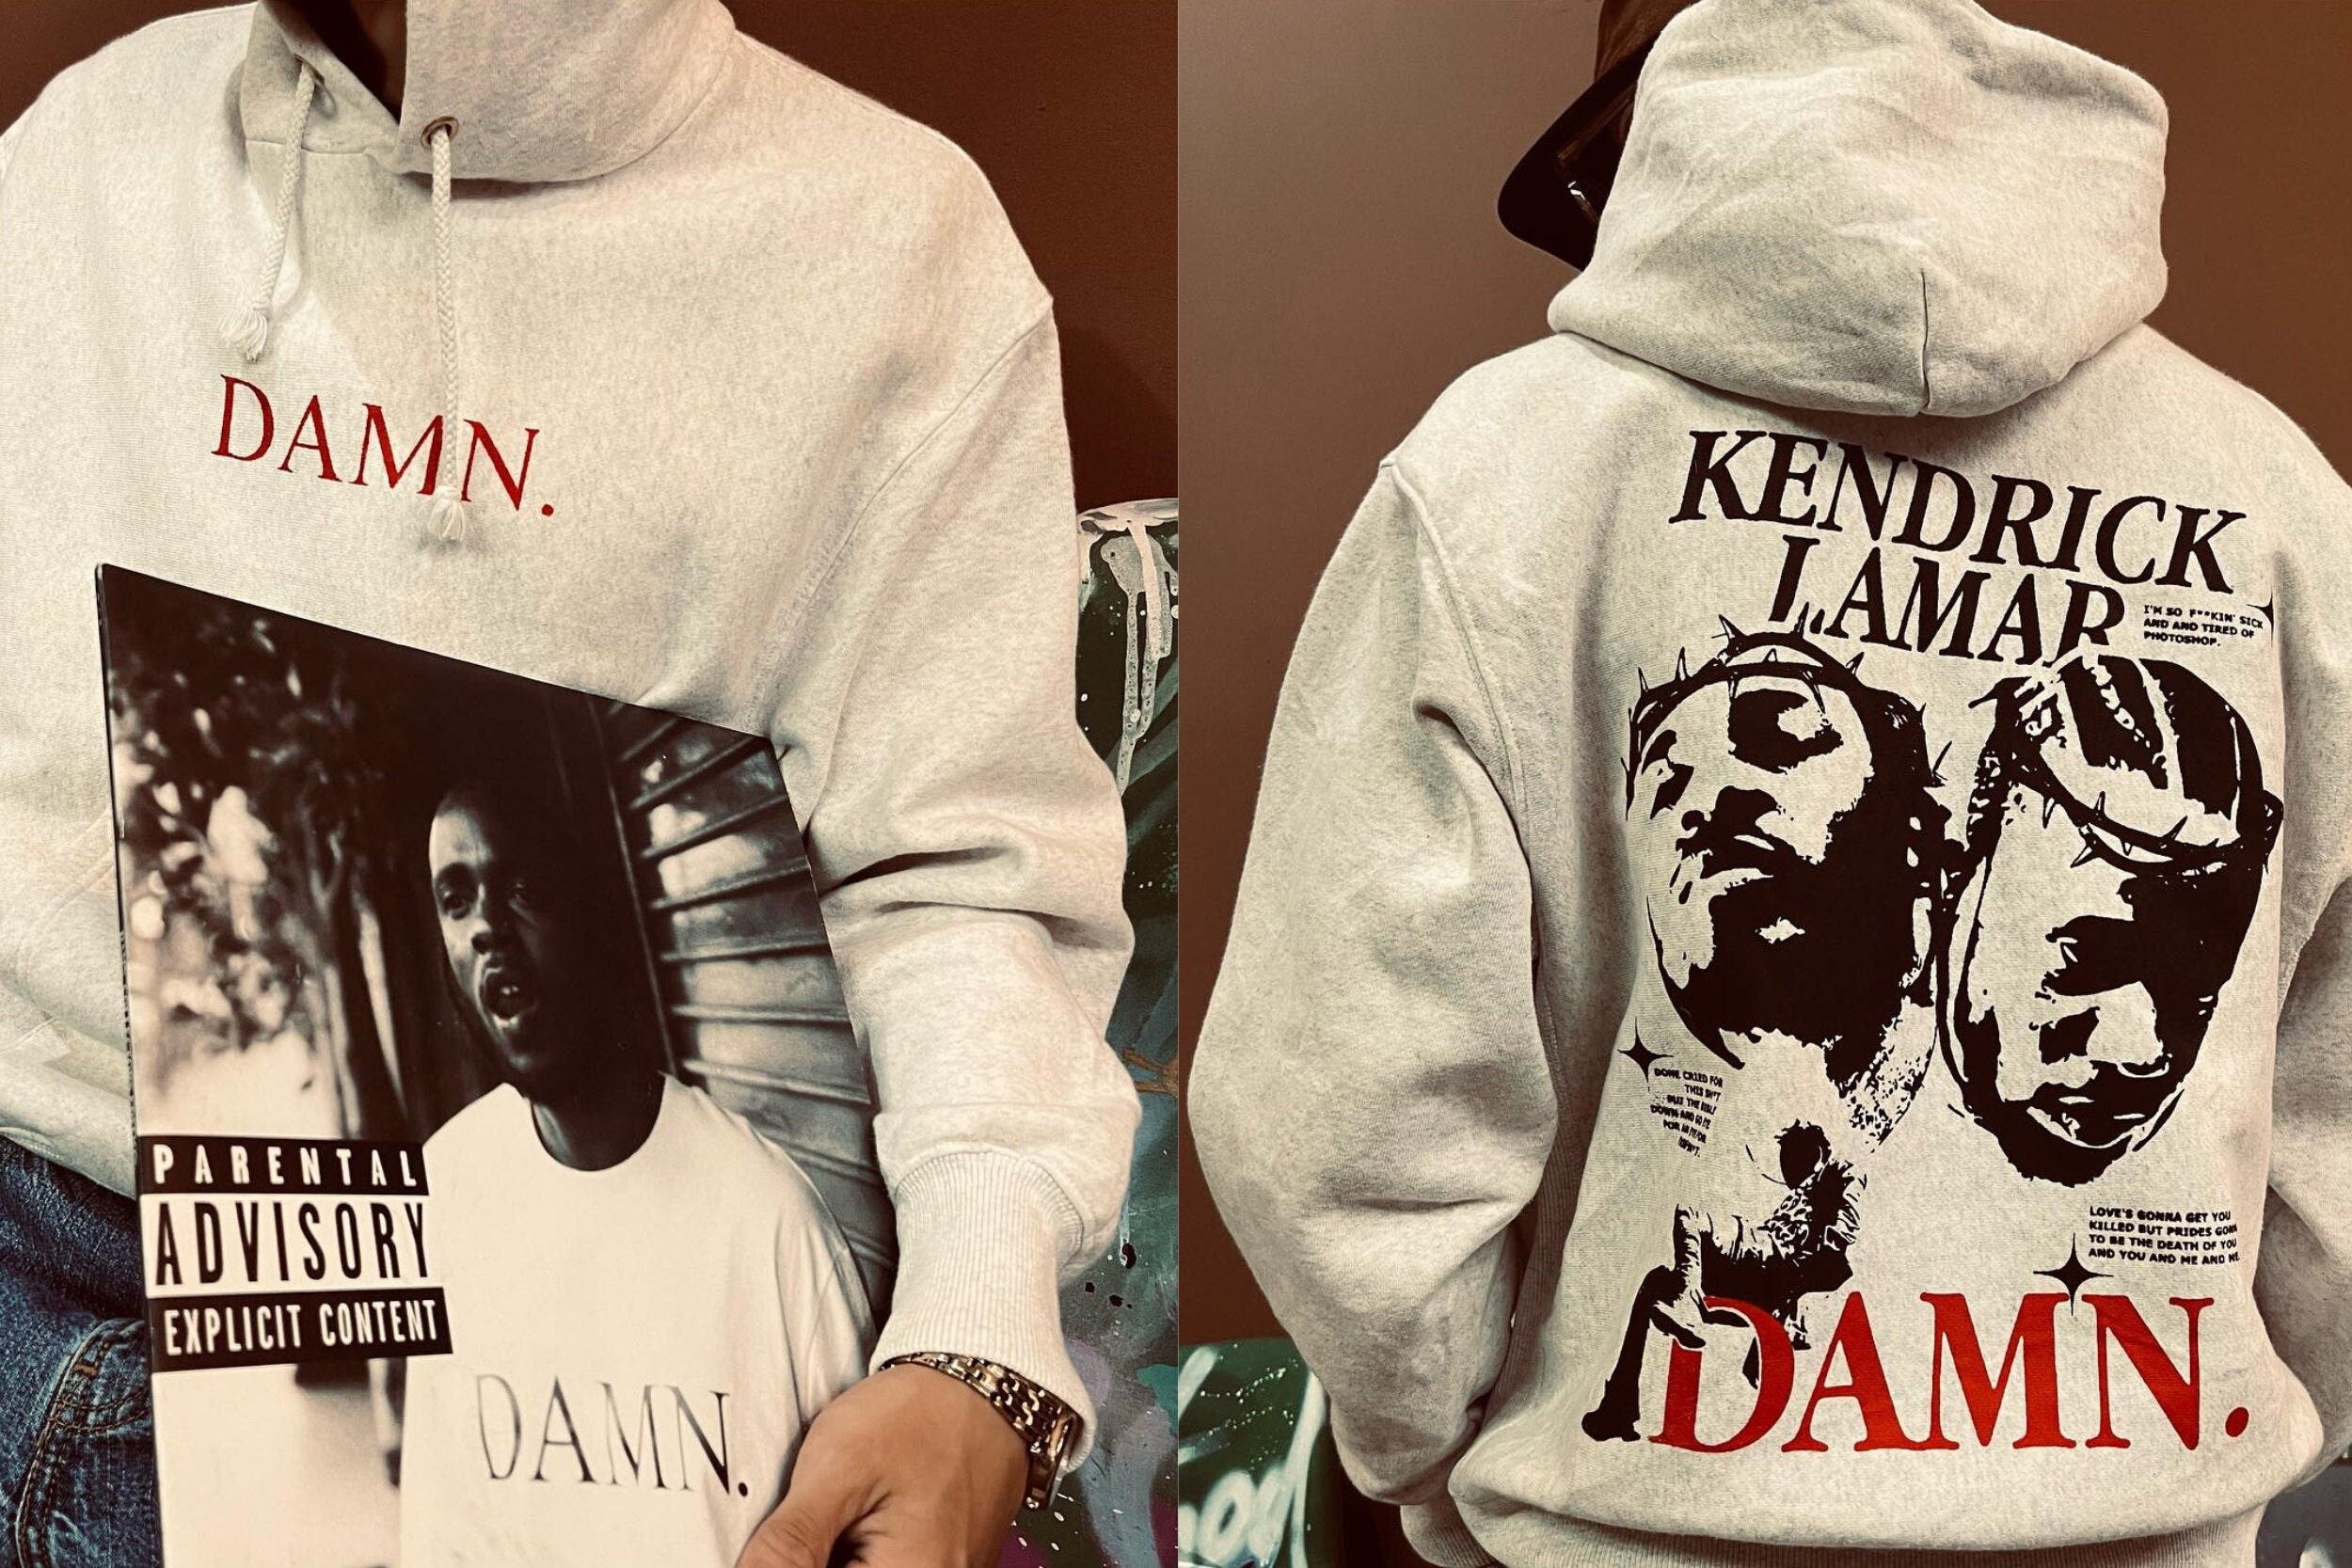 Kendrick Lamar - i (DAMN. / king logo) Magnet for Sale by gd19